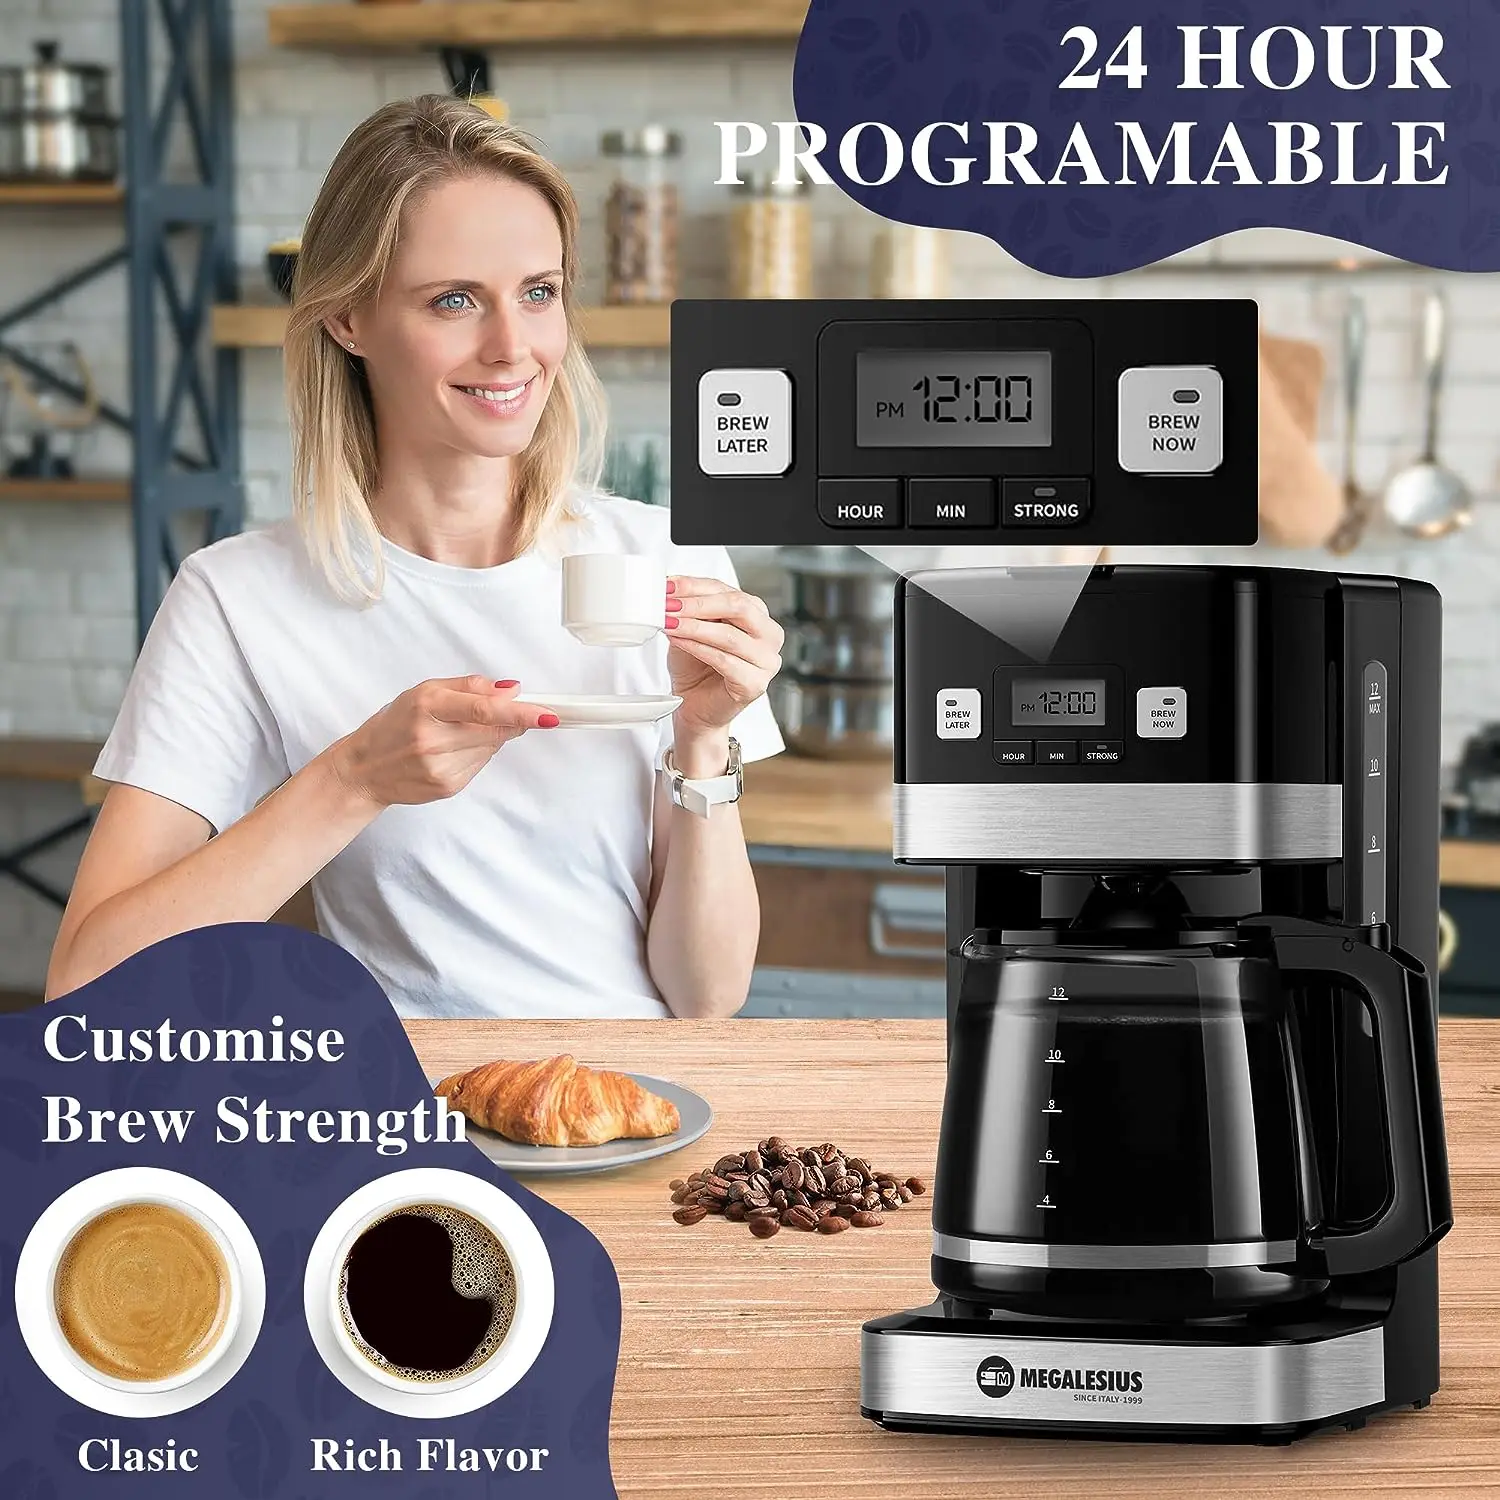 https://ae01.alicdn.com/kf/Sf688583cfcb741f58409429d33cd7d64j/Coffee-Maker-12-Cup-Coffee-Maker-With-Auto-Shut-Off-Drip-Coffee-Maker-With-4-Hour.jpg